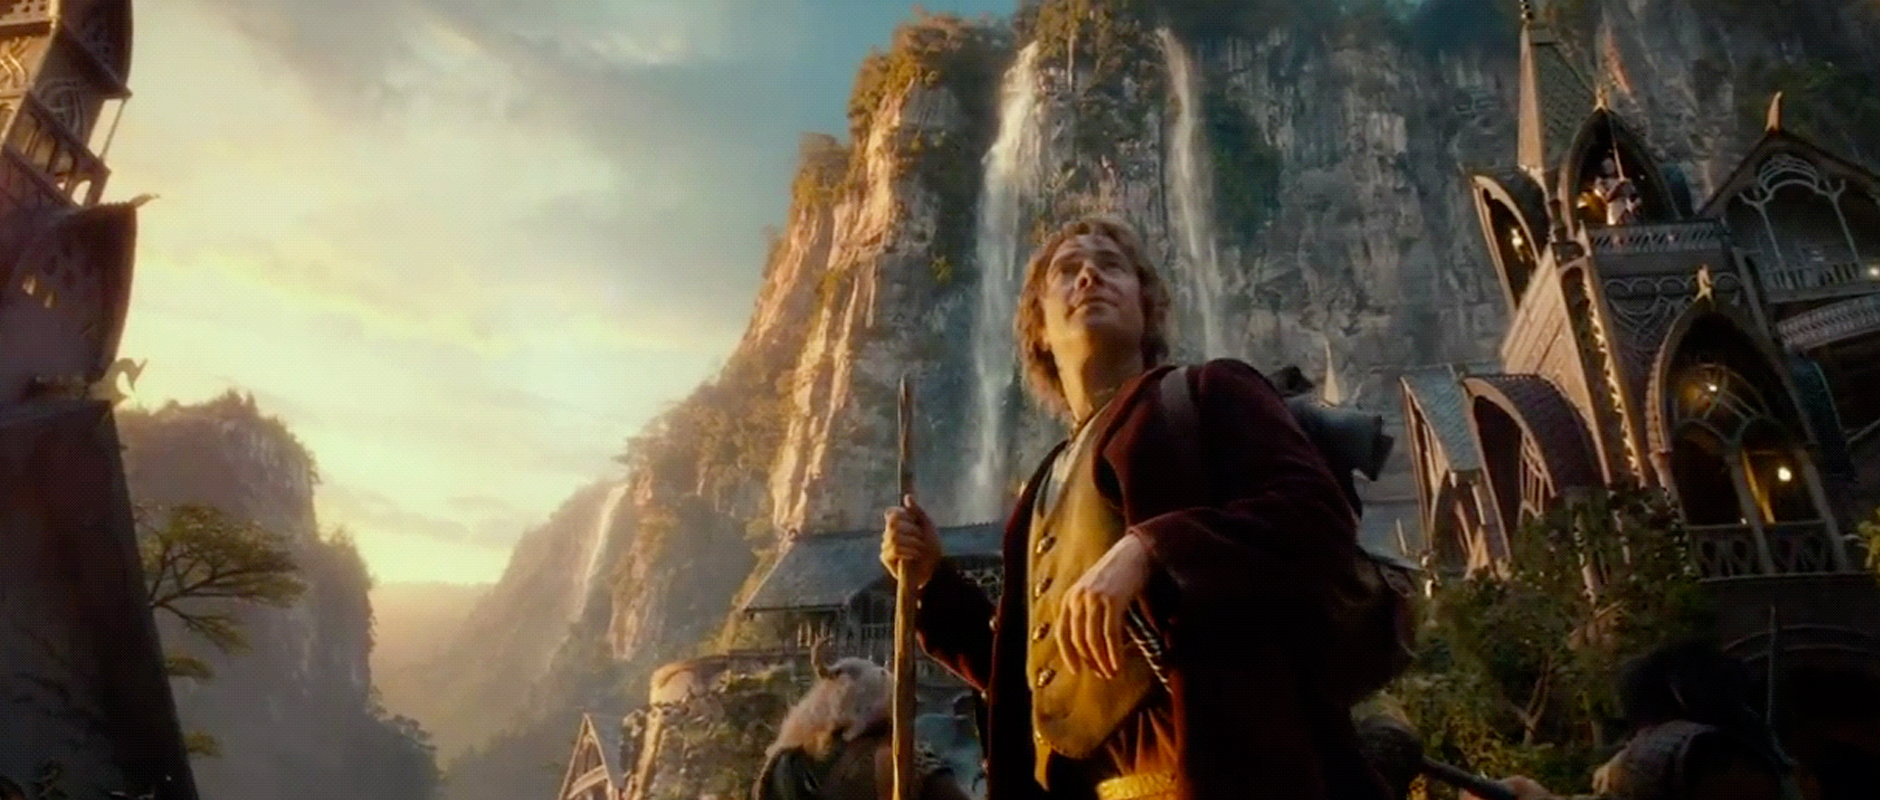 The Hobbit: An Unexpected Journey, Film